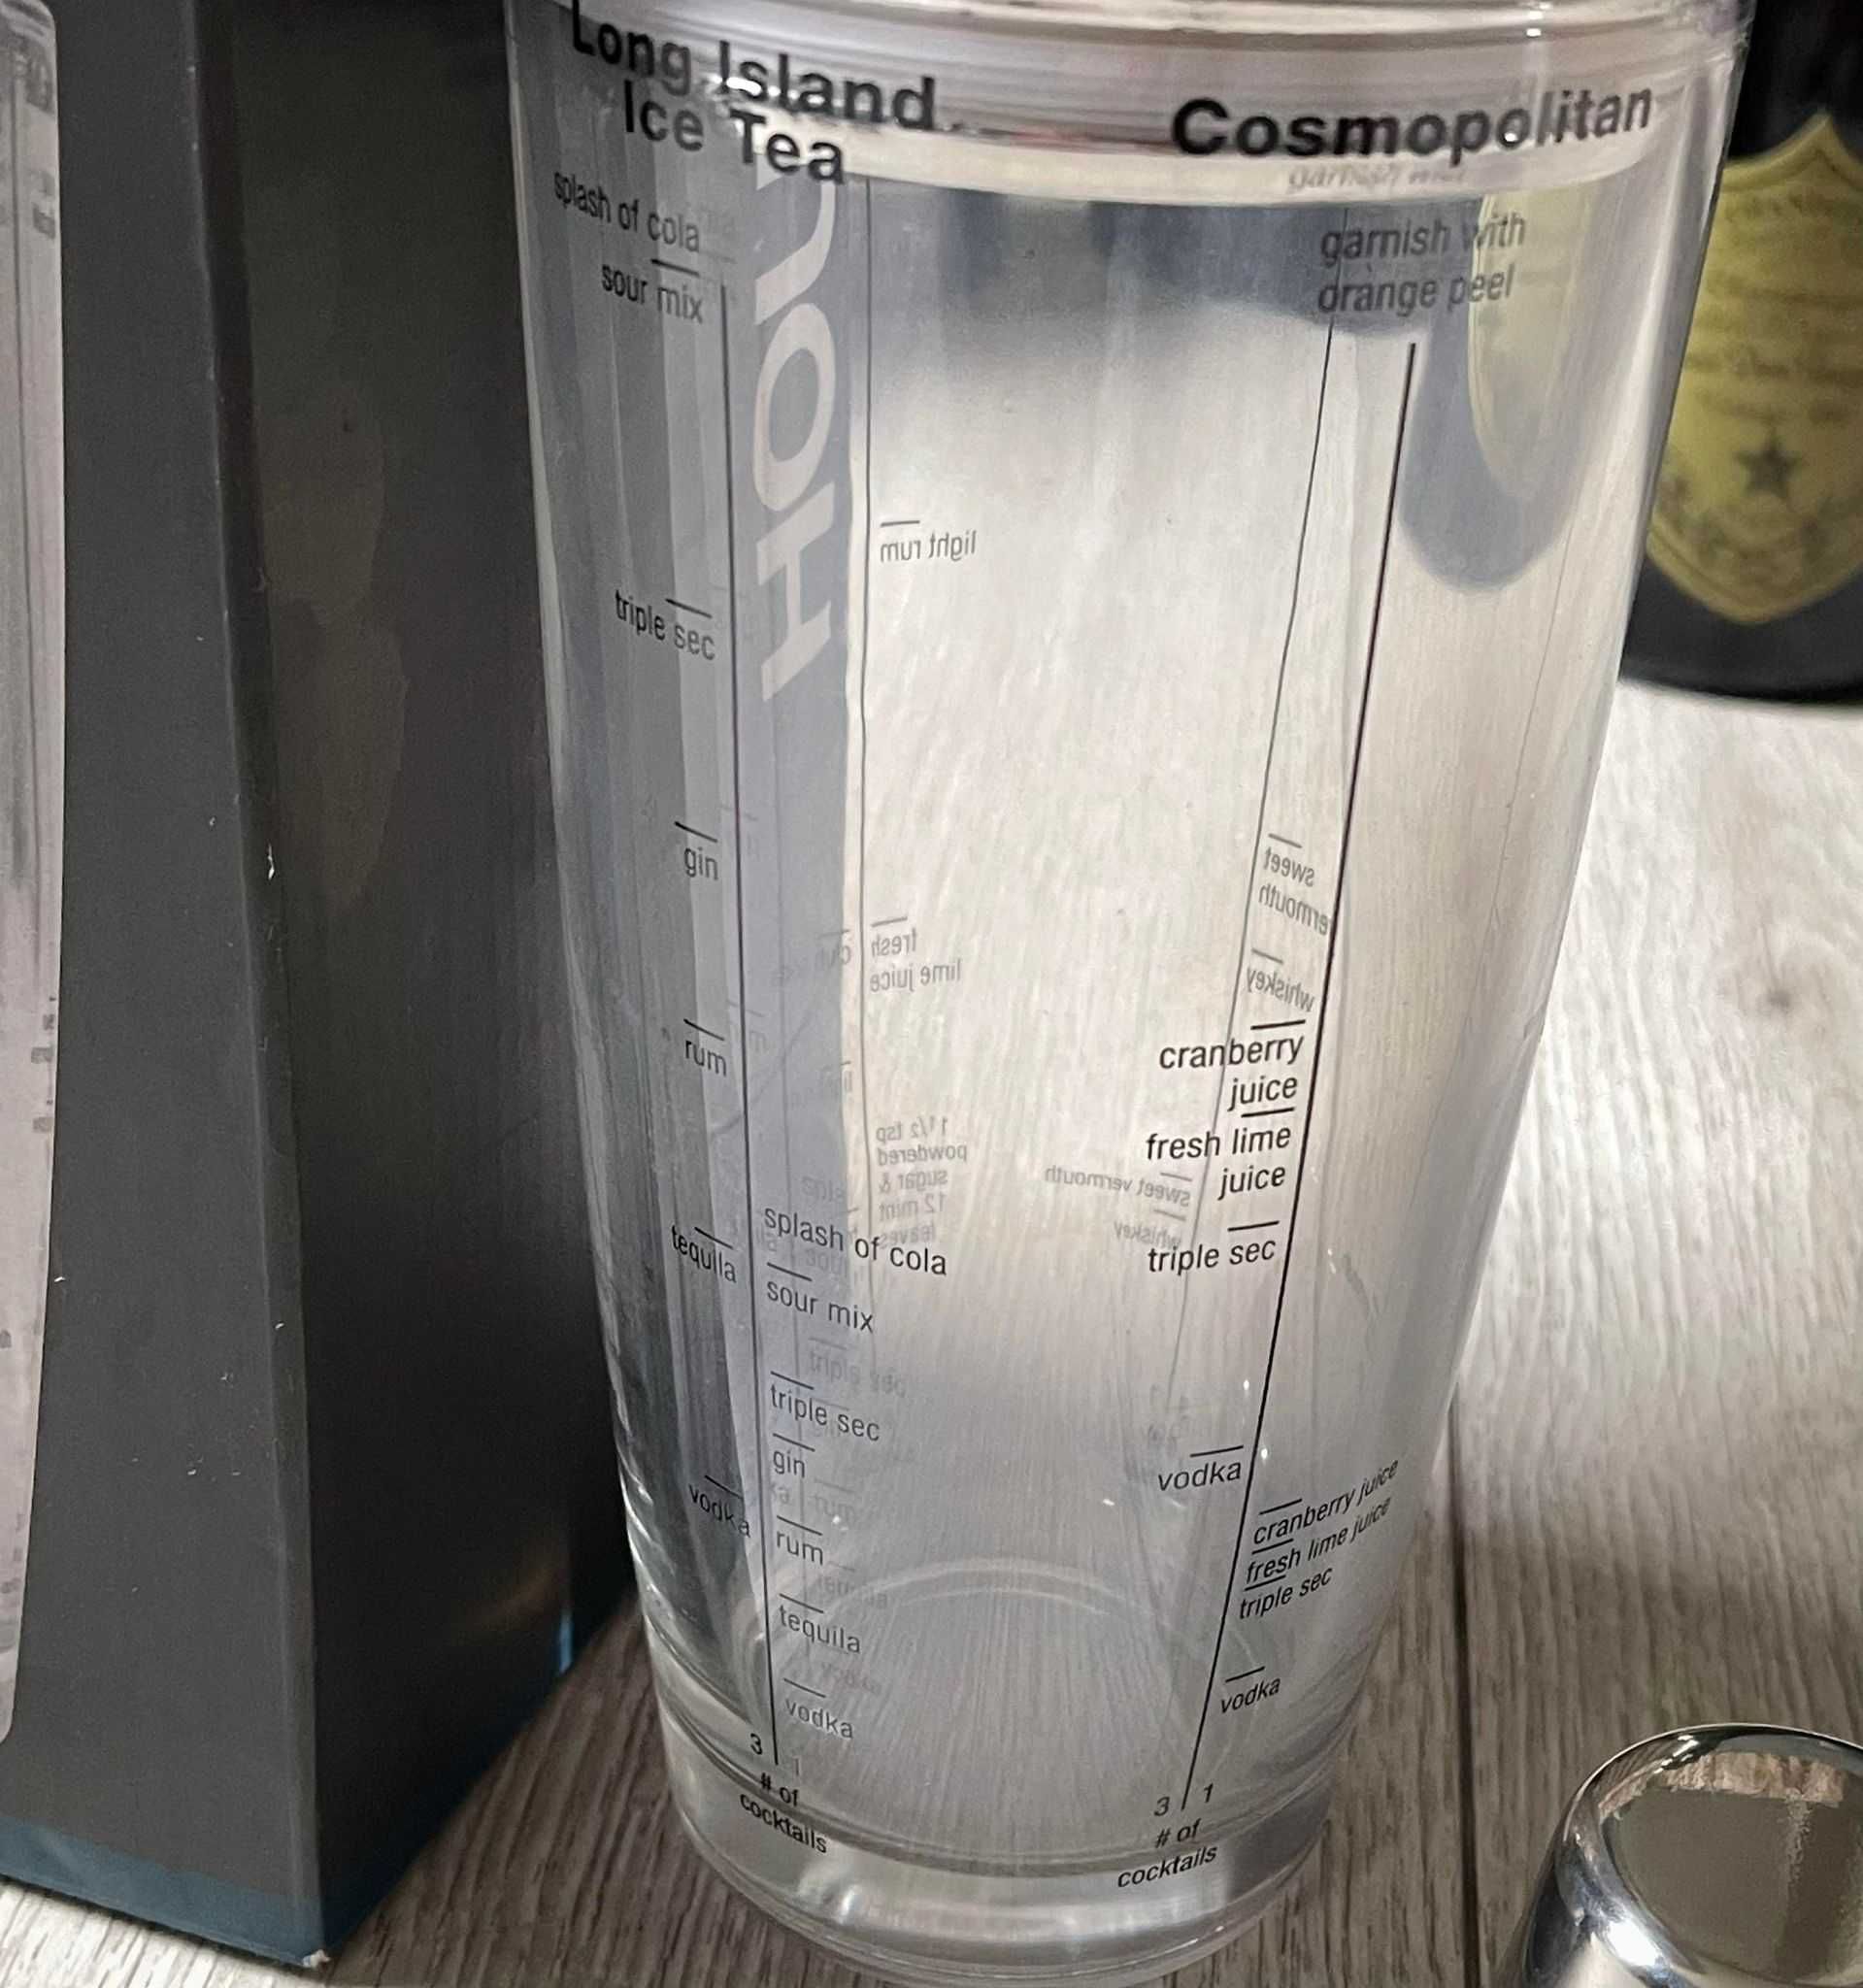 Houdini  Glass Cocktail      Shaker